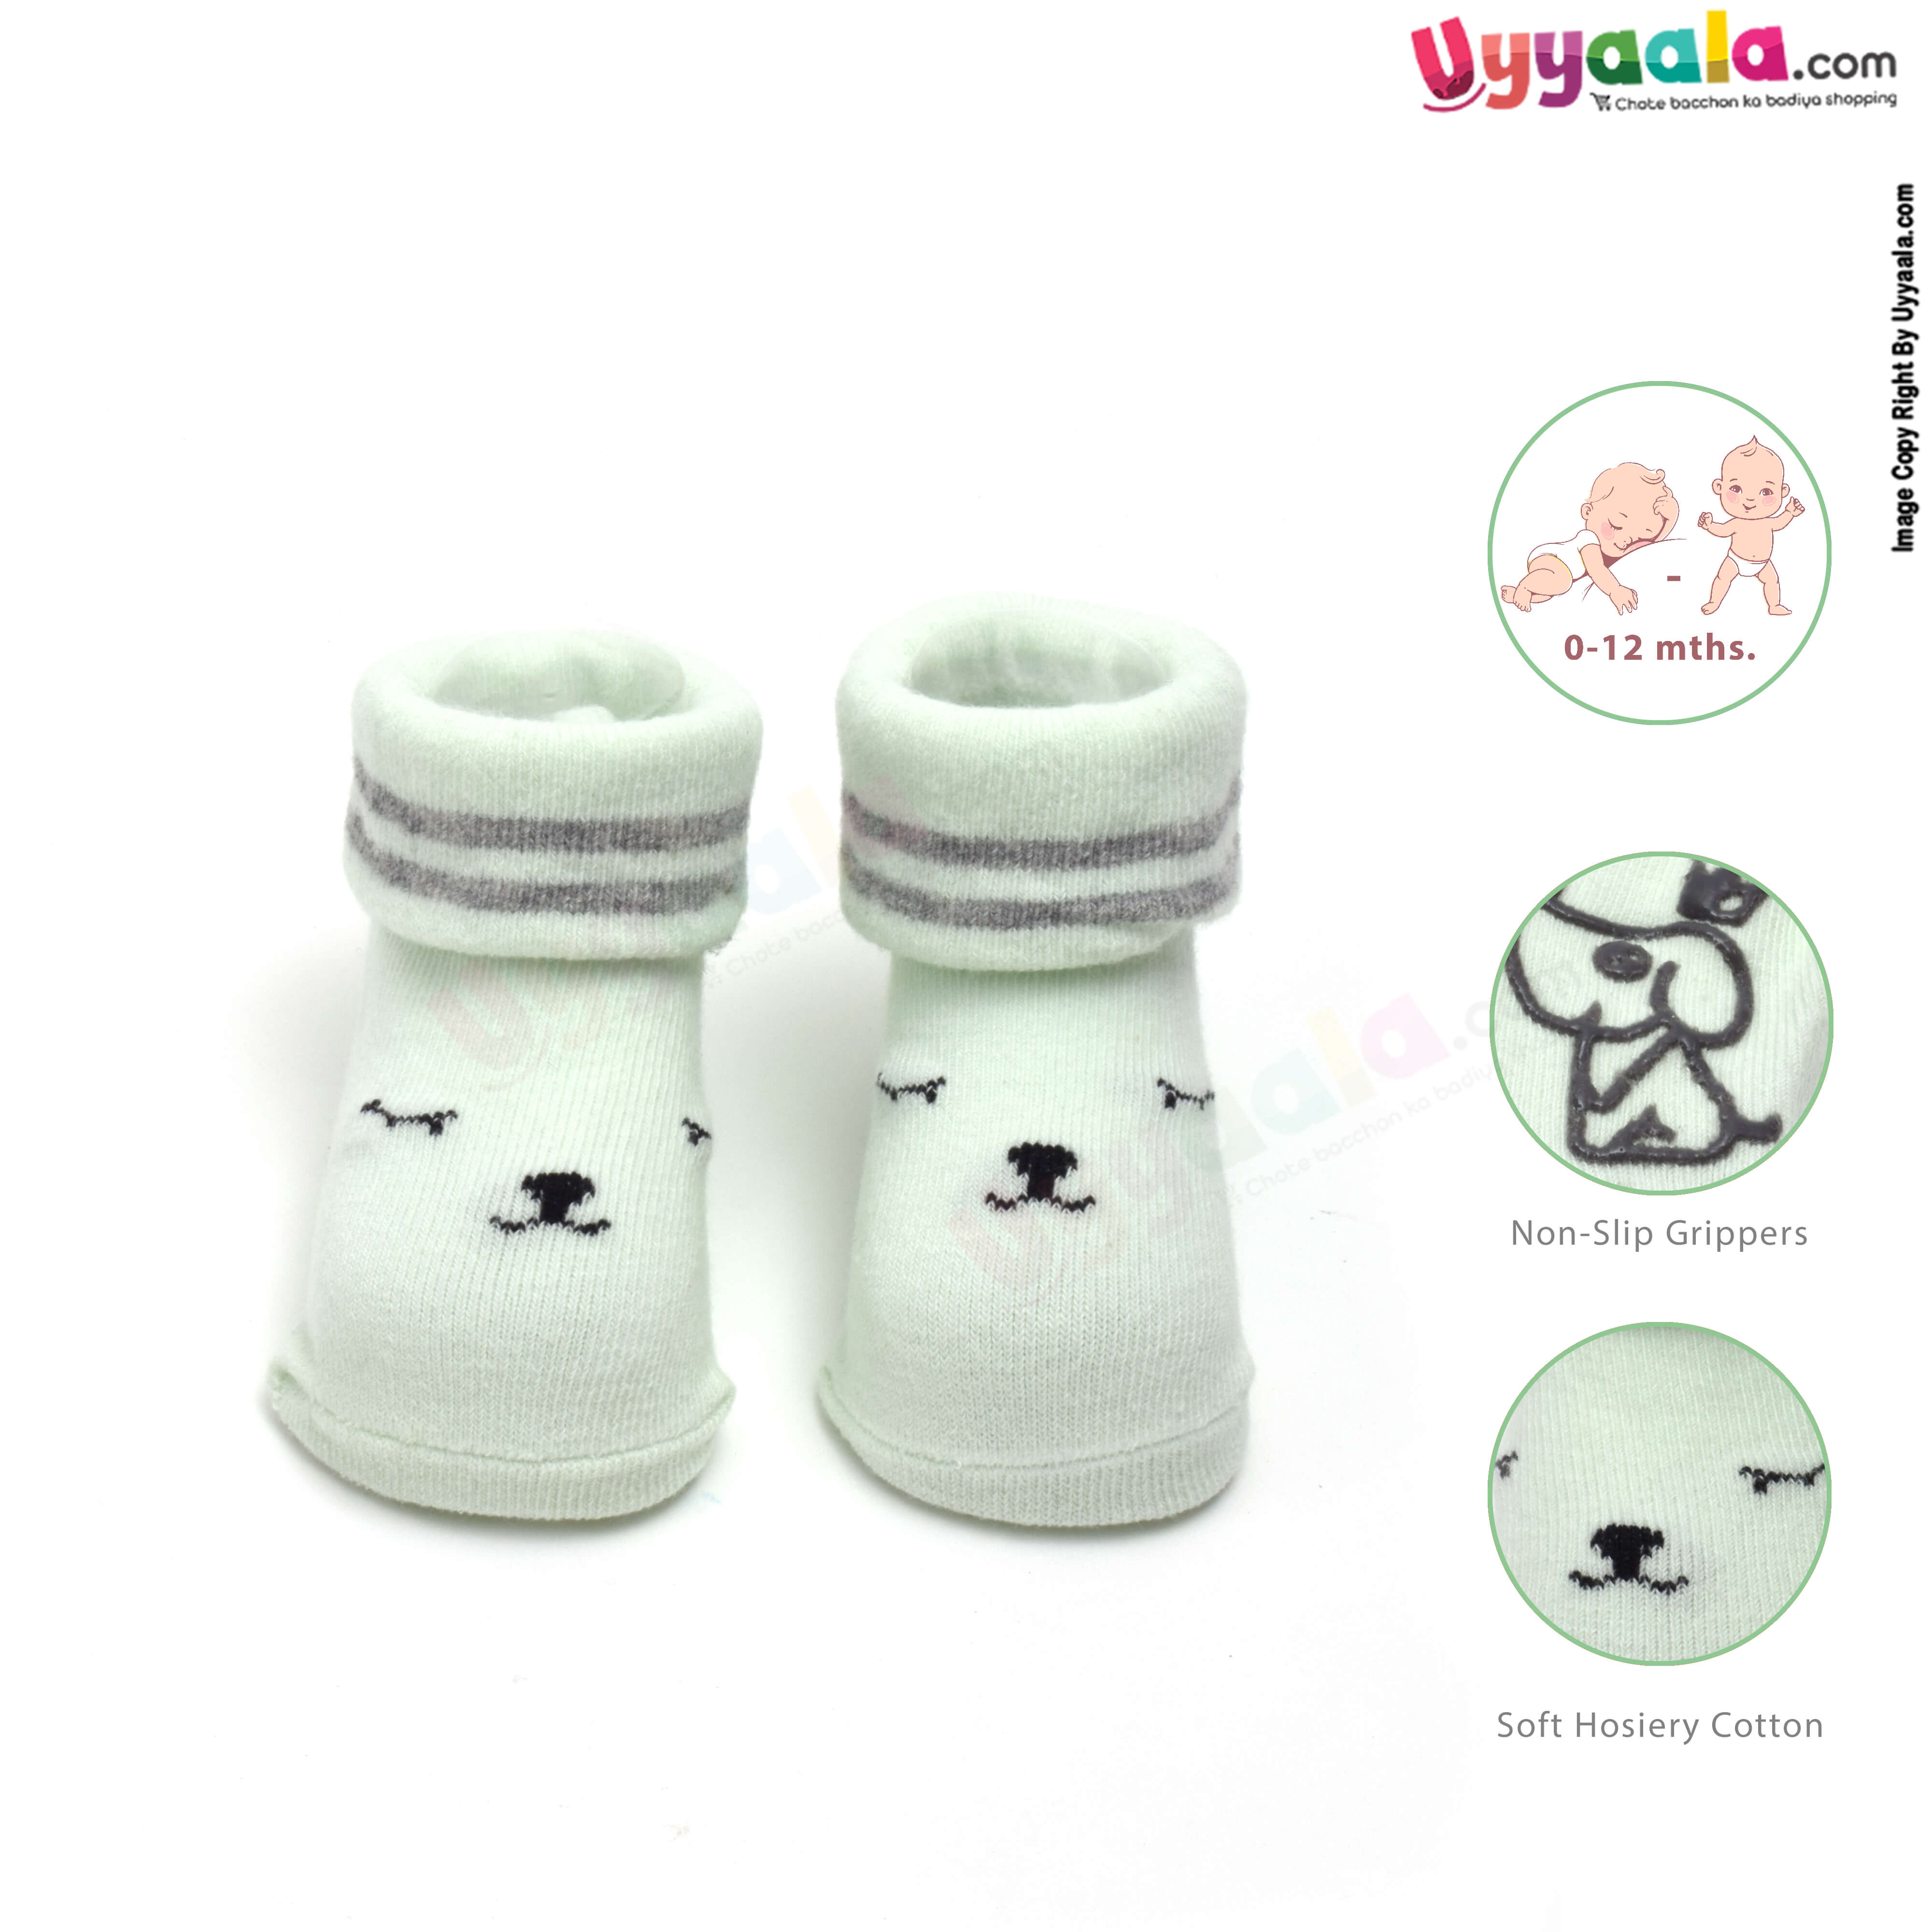 Hosiery Cotton Baby Socks